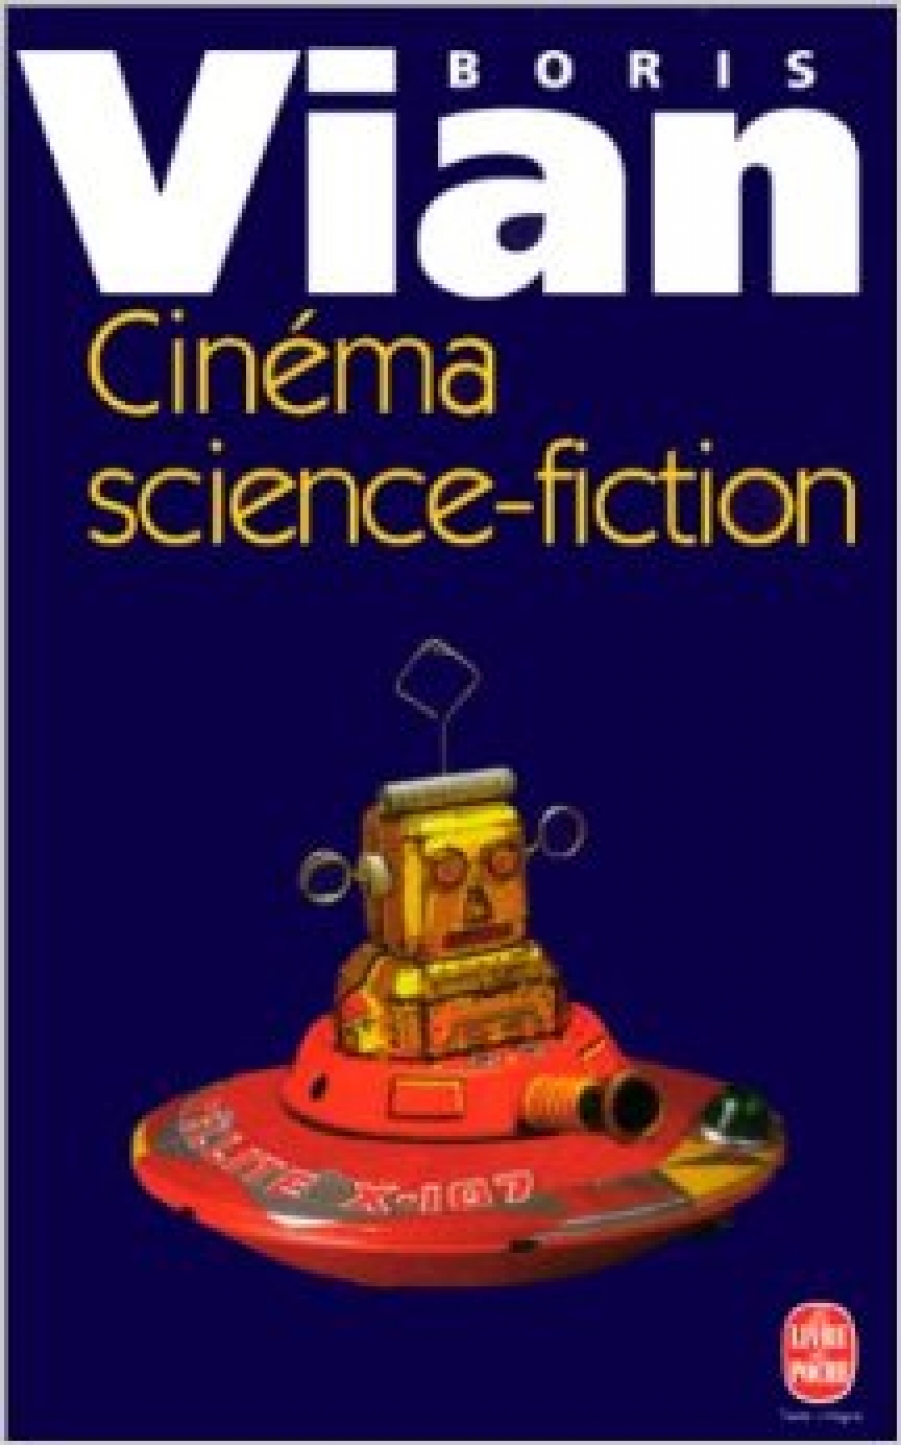 Boris V. Cine'ma science-fiction 